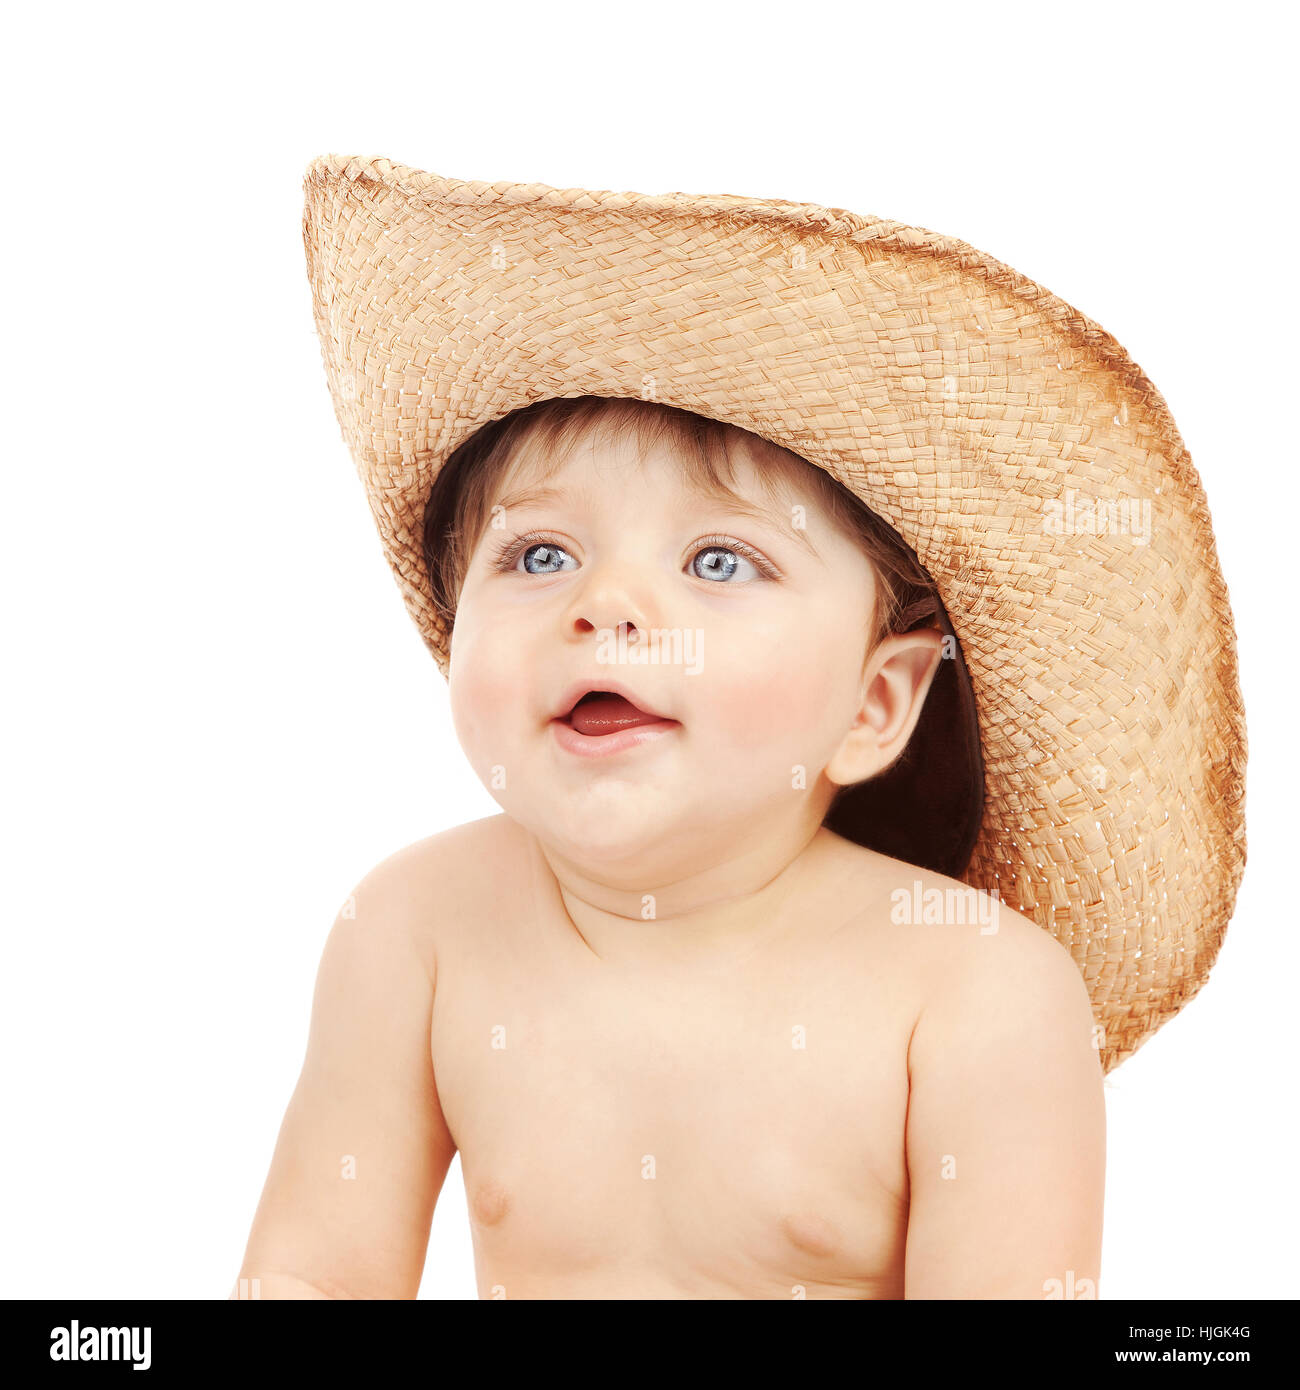 portrait, baby, funny, childhood, adorable, enthusiasm, amusement, enjoyment, Stock Photo